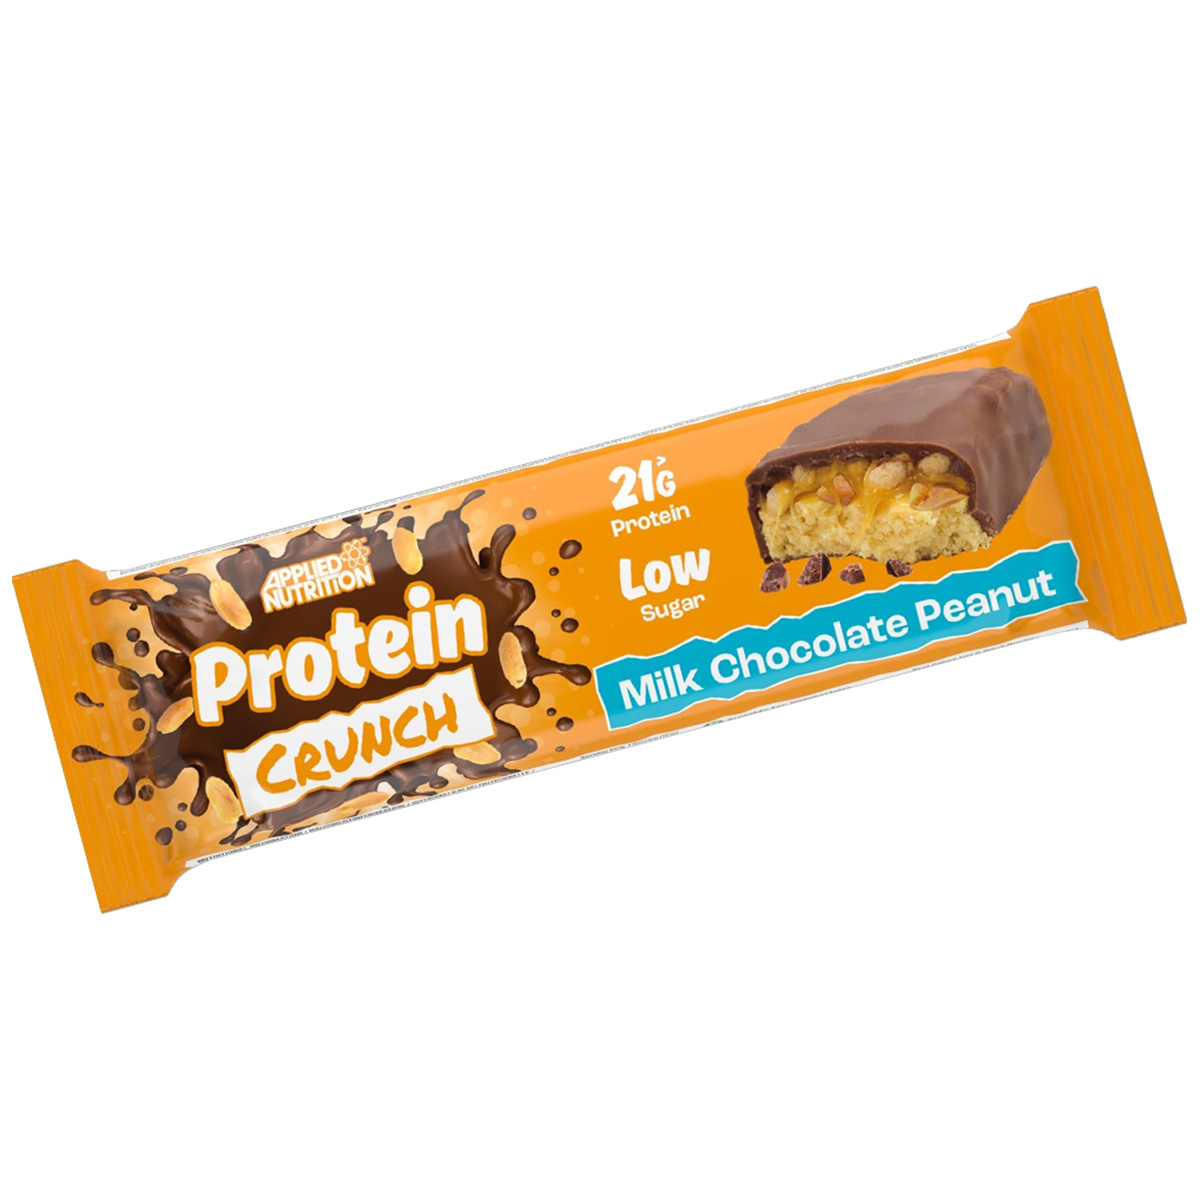 Applied Nutrition Protein Crunch Bar, Milk Chocolate Peanut, 1 Bar, 21g > Protein